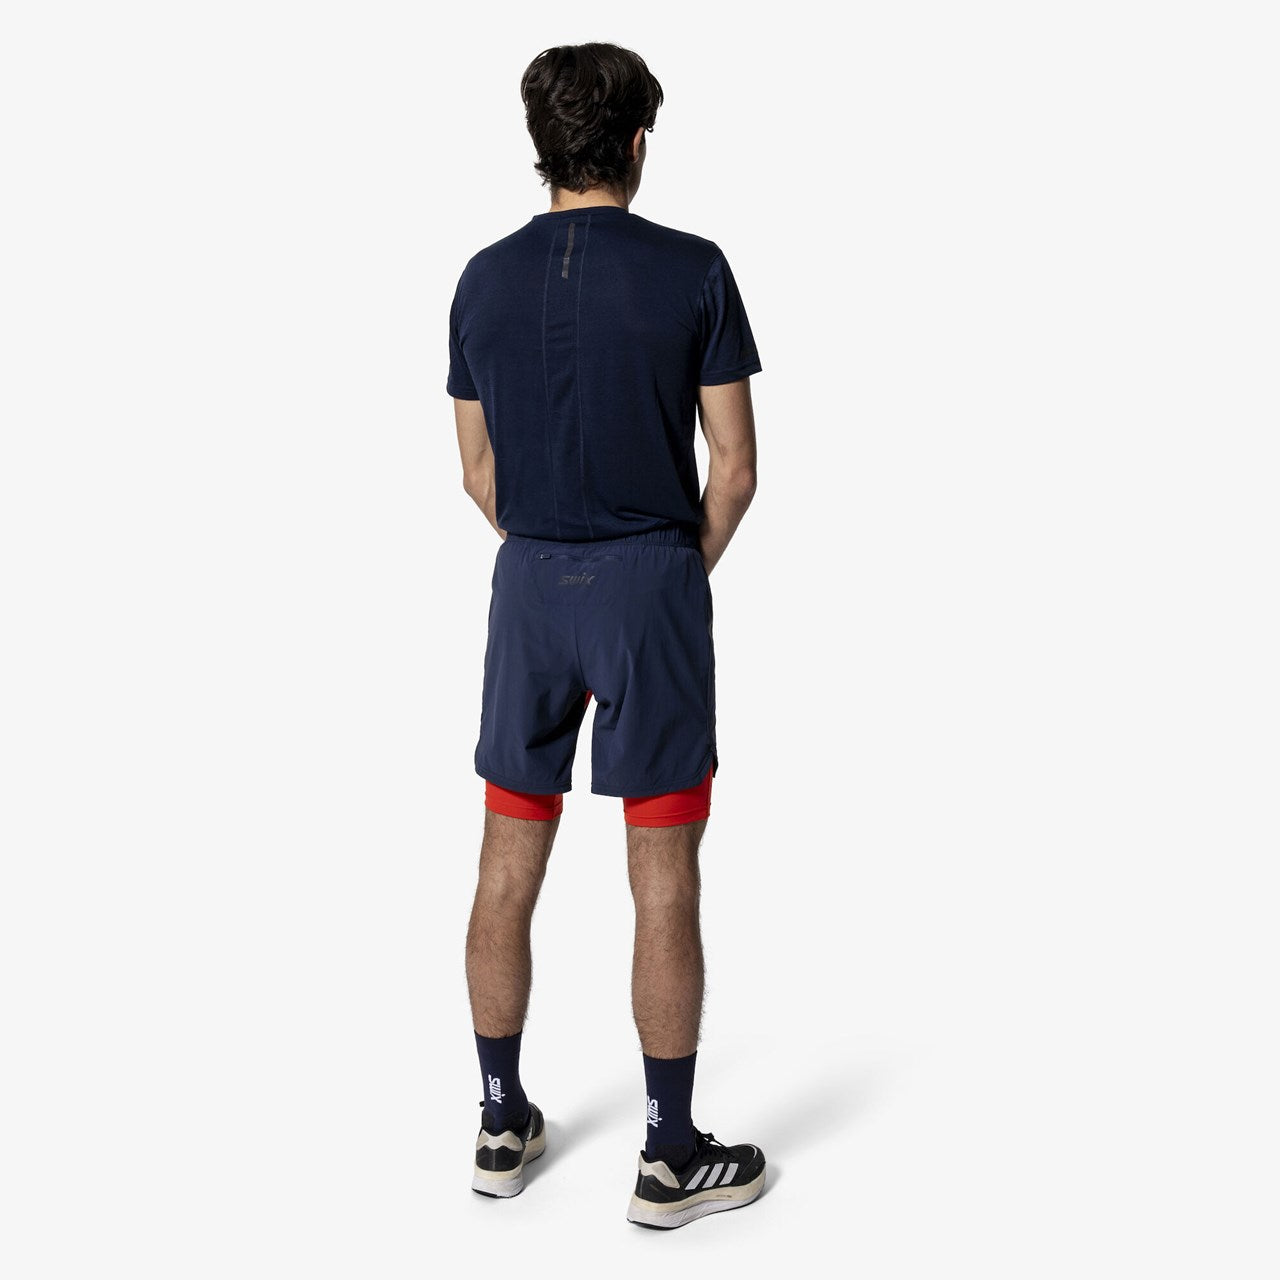 Pace - Men's Hybrid Shorts